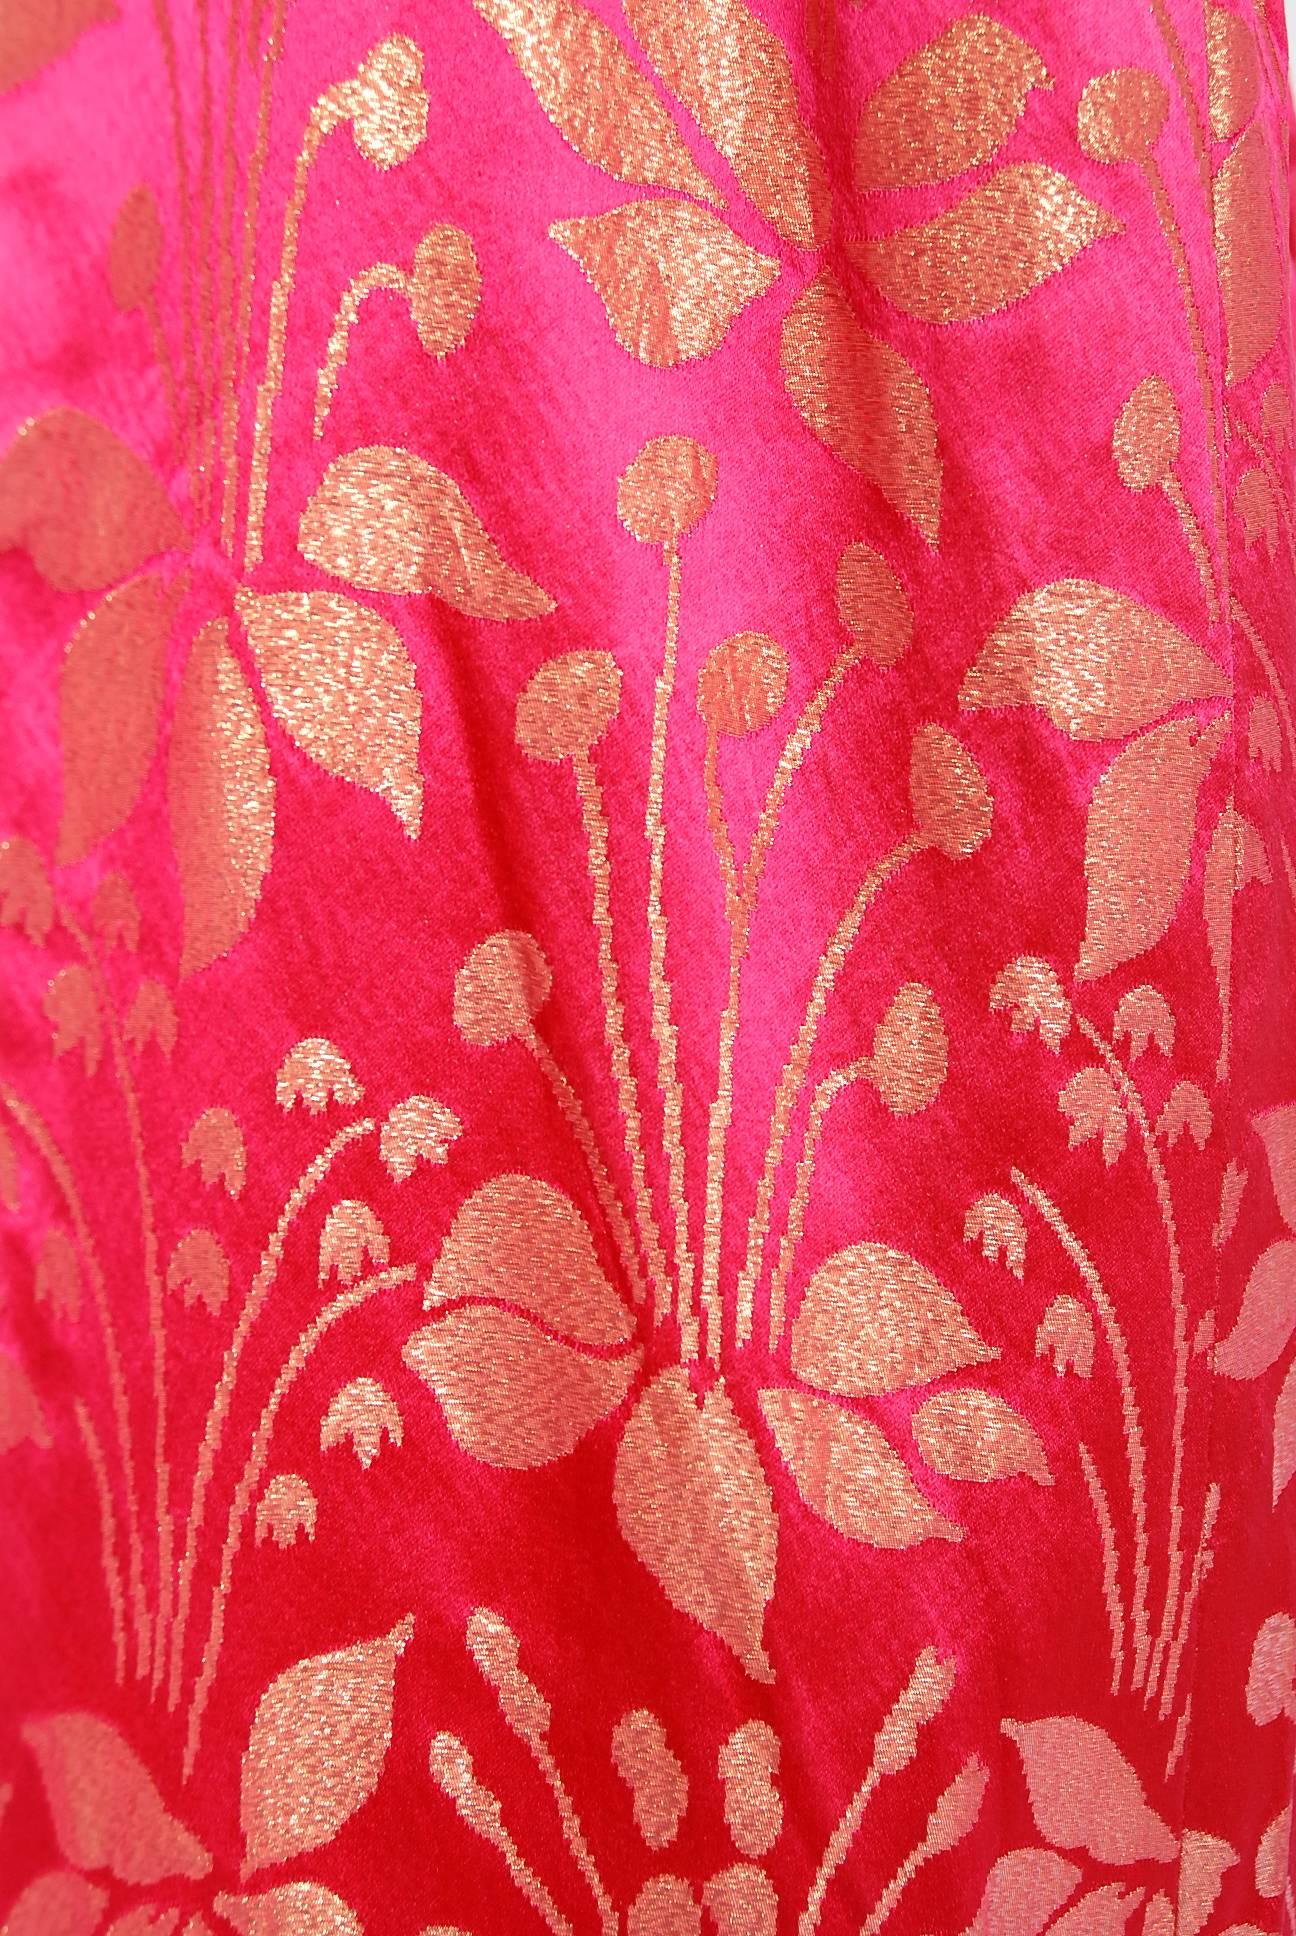 Red 1959 Sarmi Couture Metallic Fuchsia Floral Motif Brocade Strapless Evening Gown